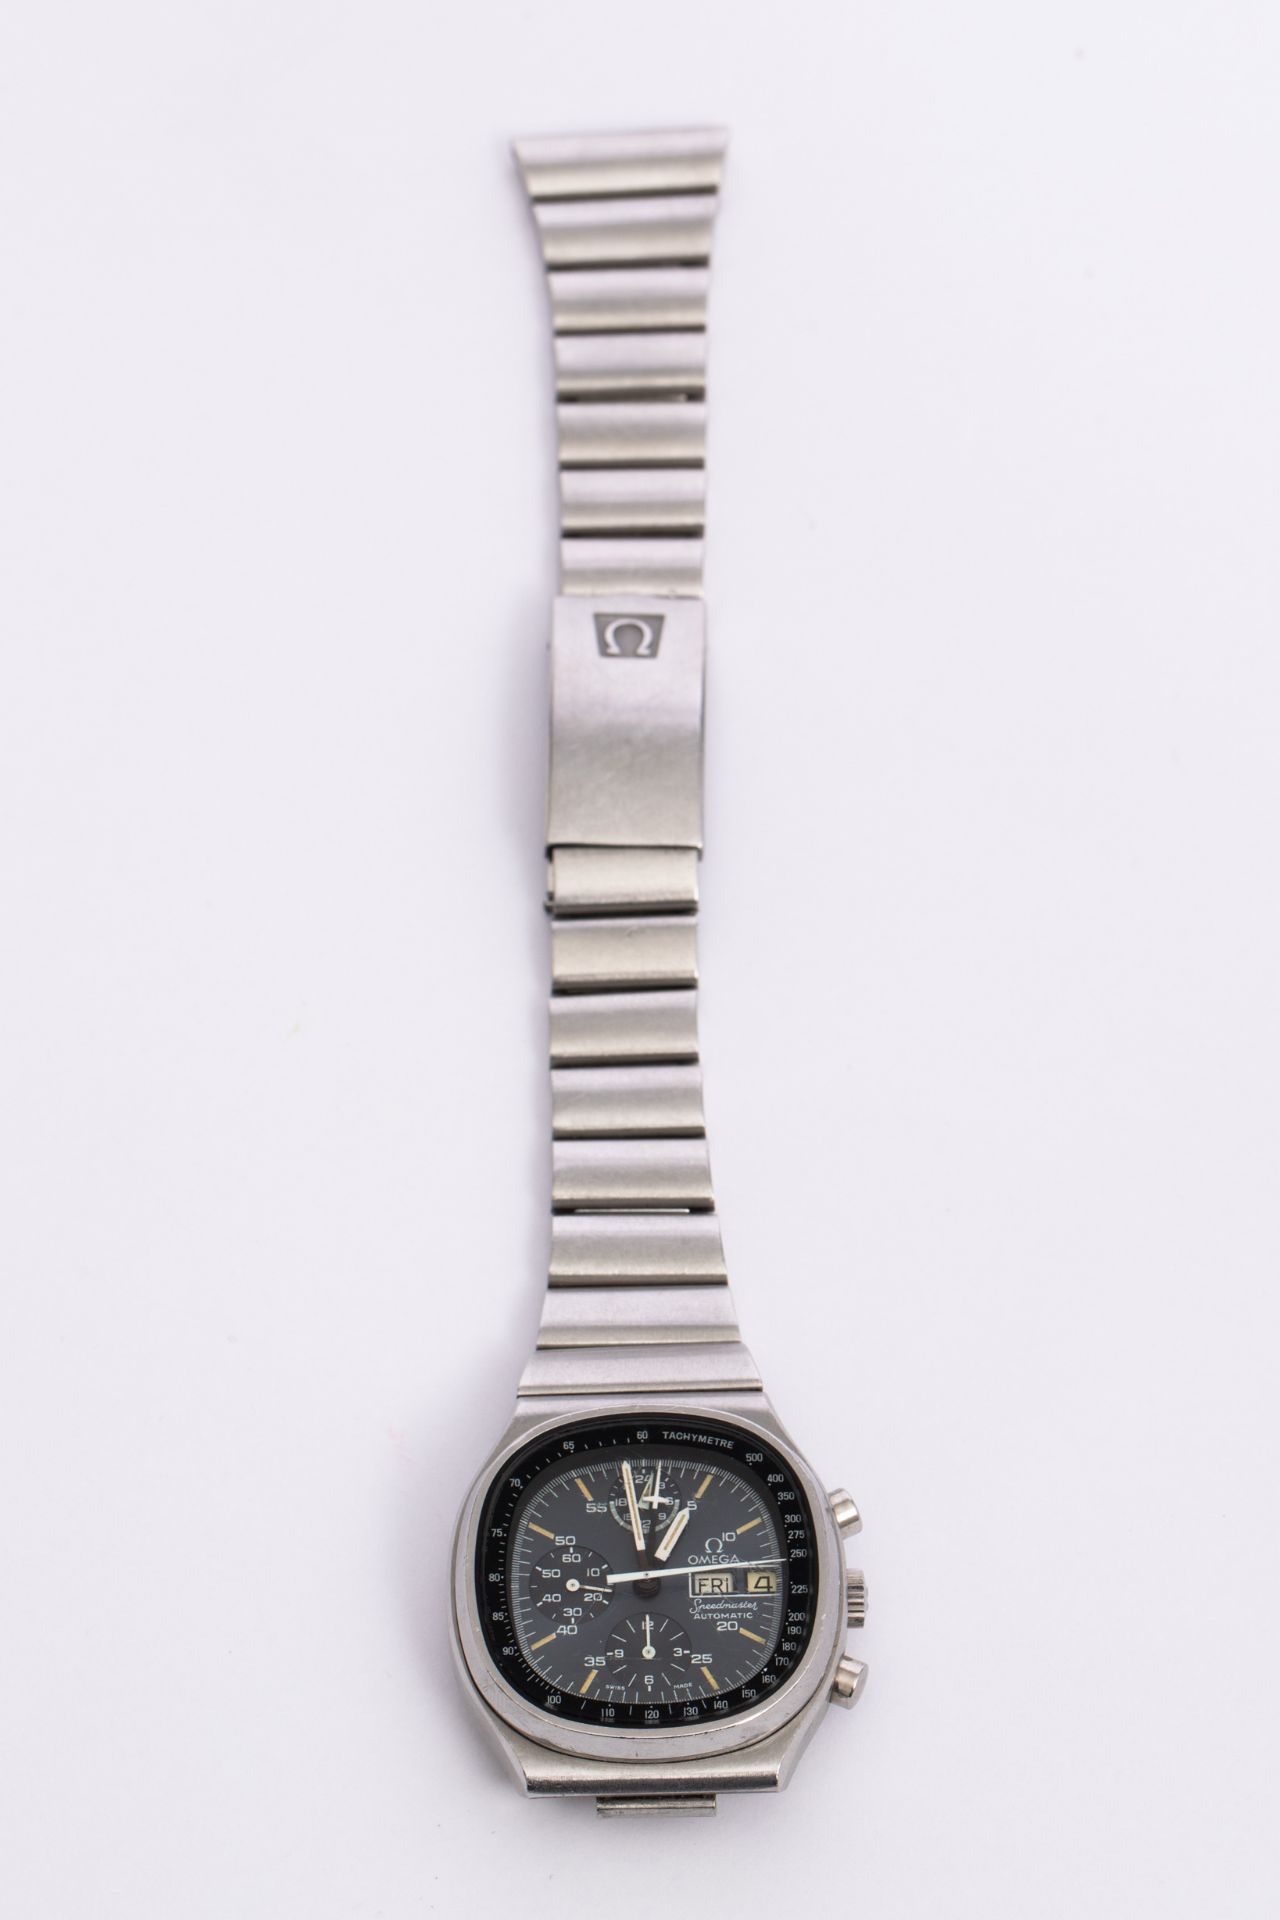 OMEGA Speedmaster Mark IV TV Chronograph wristwatch, Reference 176.0014, 1970s - Image 3 of 6